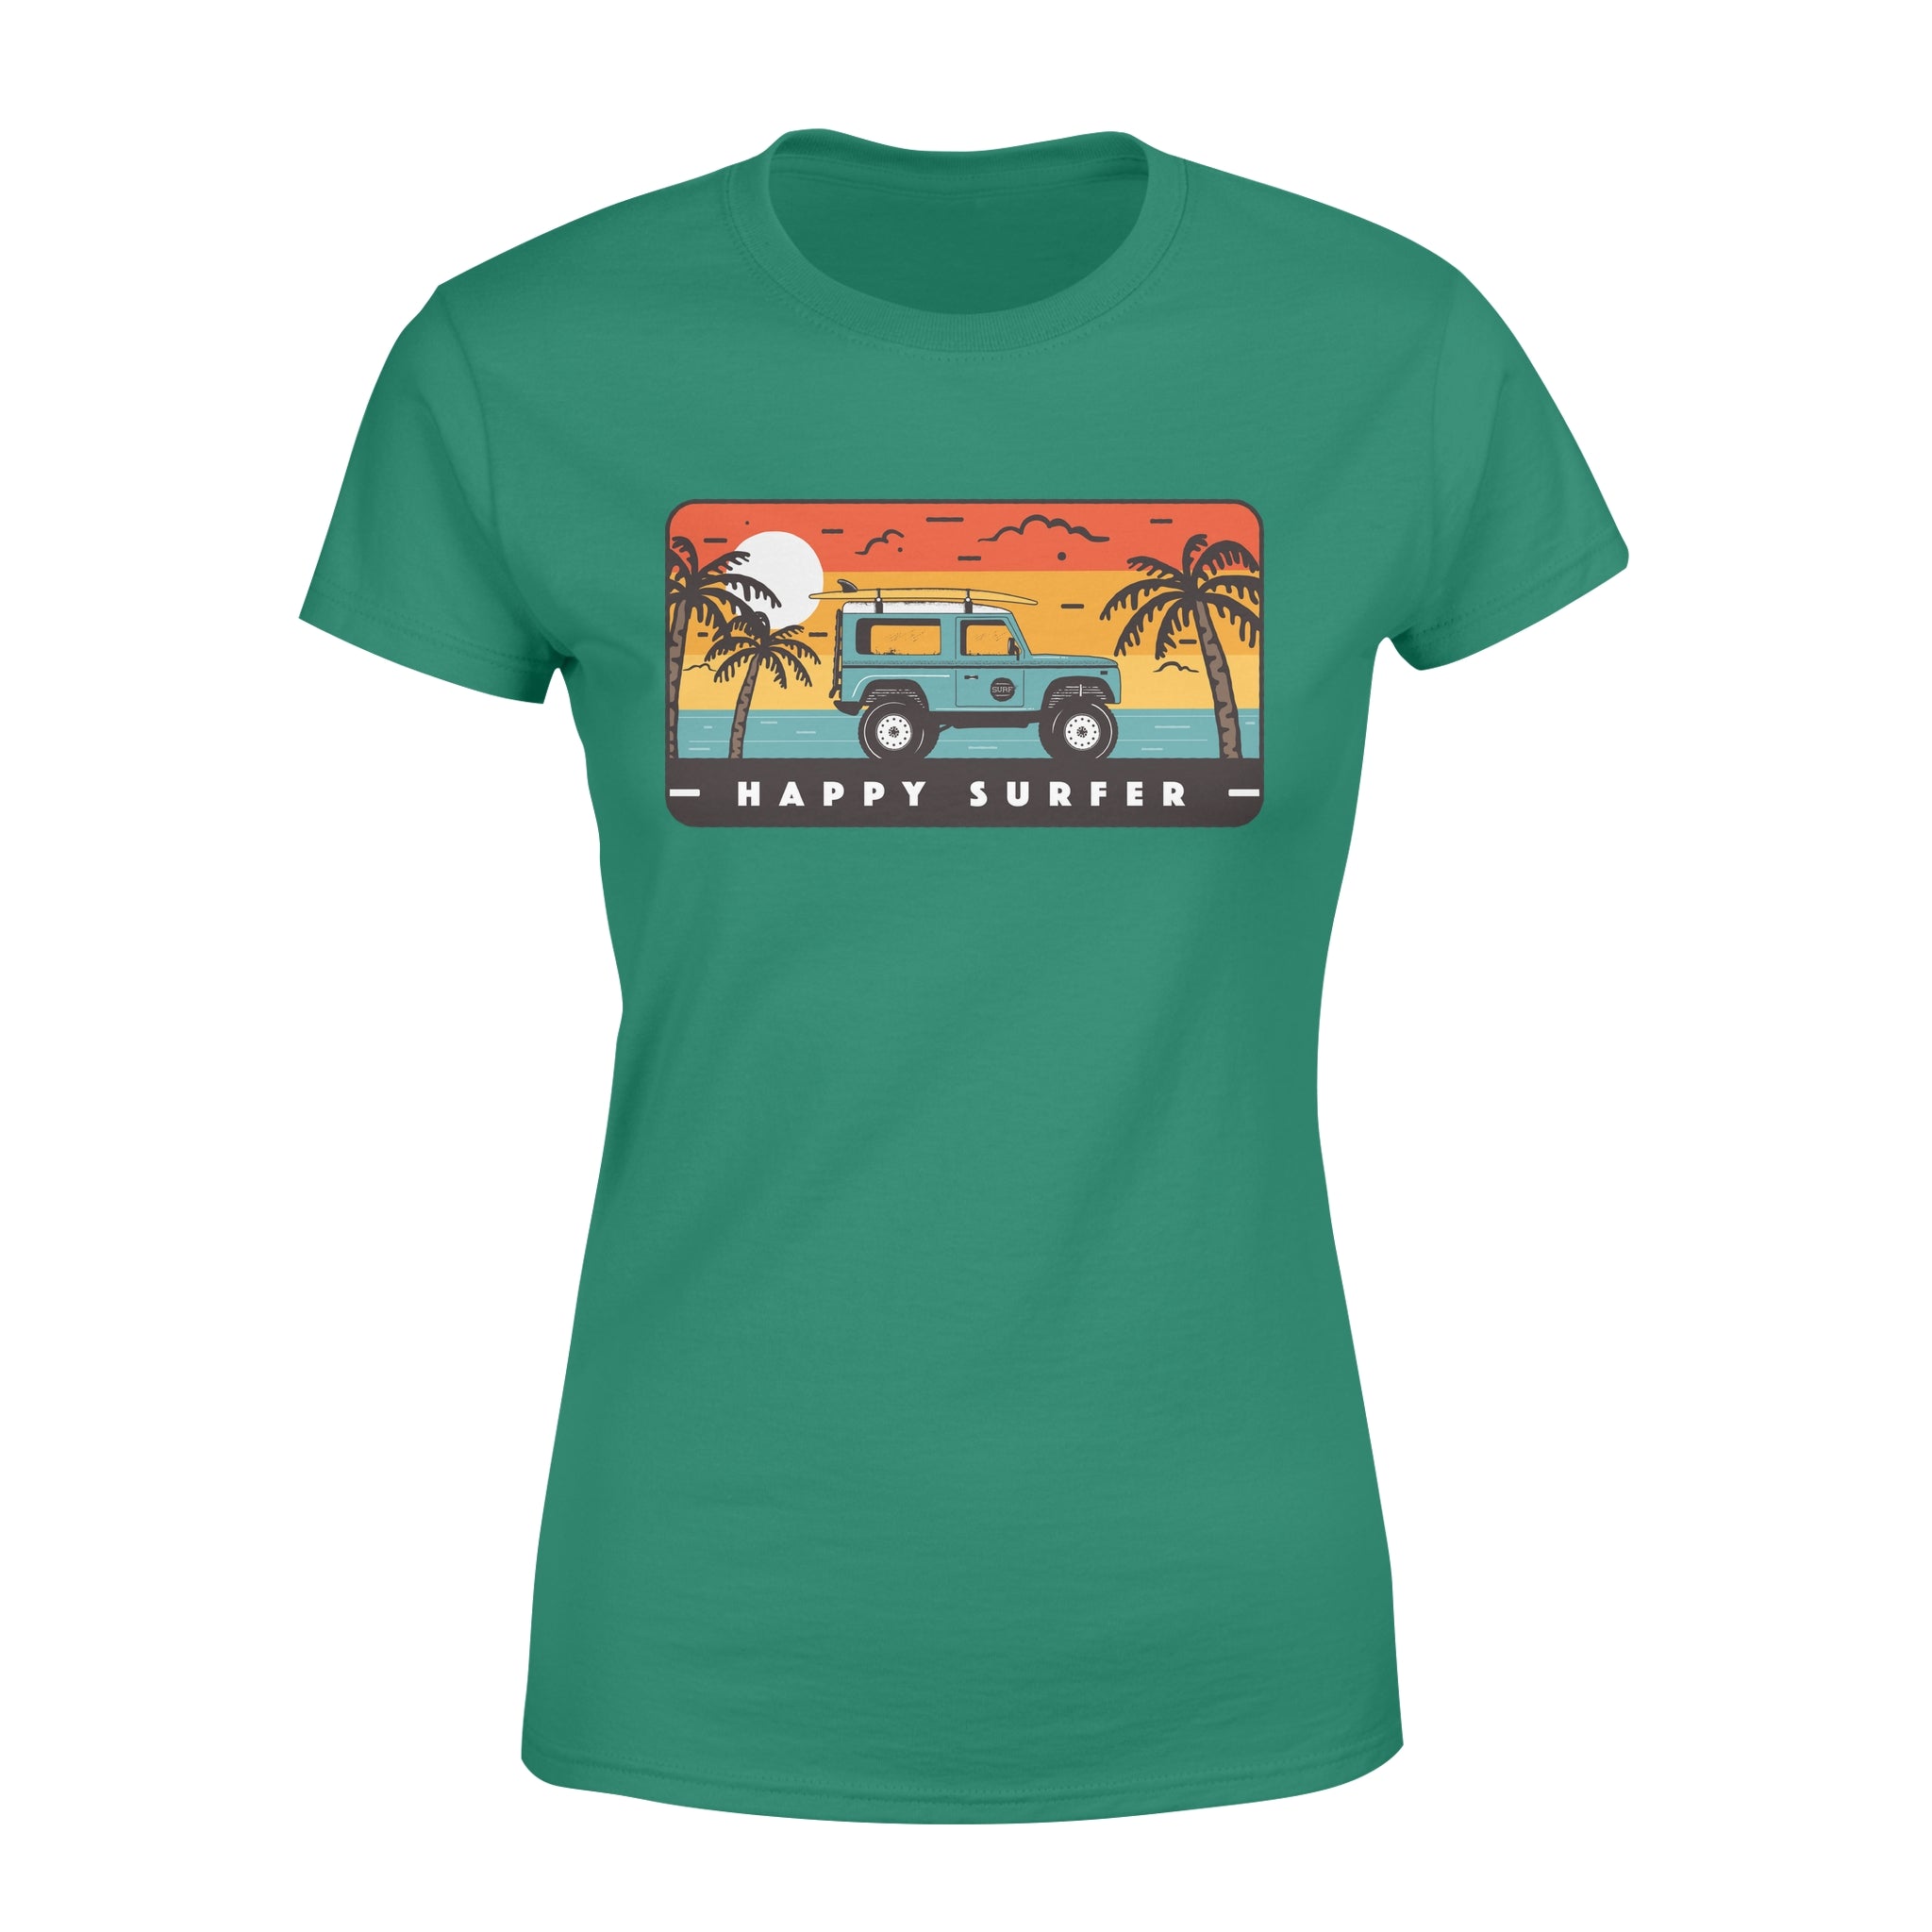 Happy Surfer - Women's T-shirt